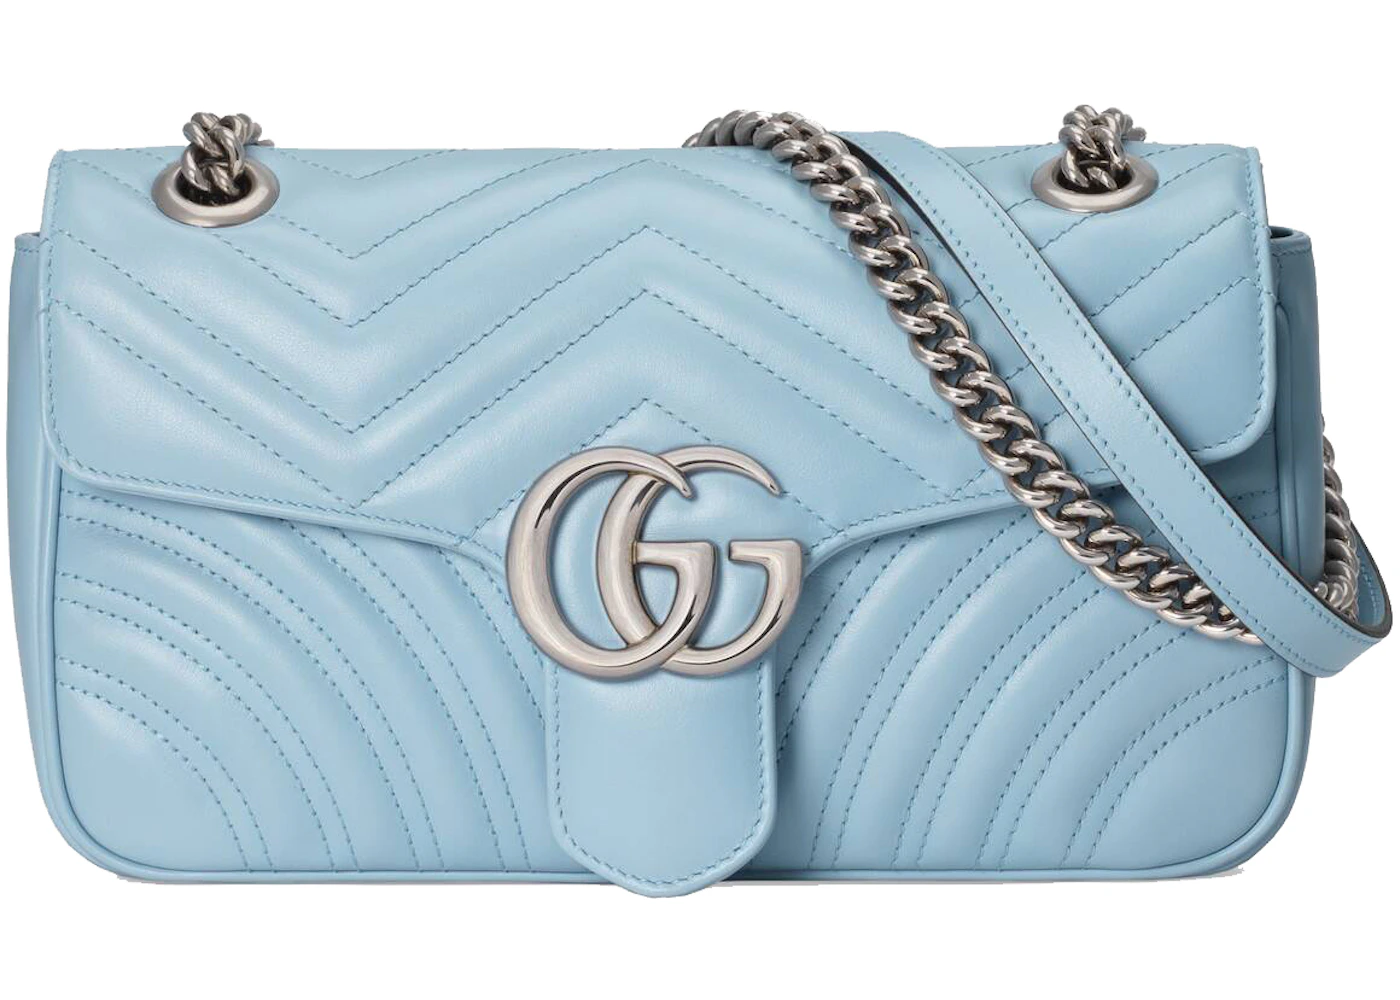 Gucci Marmont Shoulder Bag GG Small Pastel Blue in Matelasse Calfskin ...